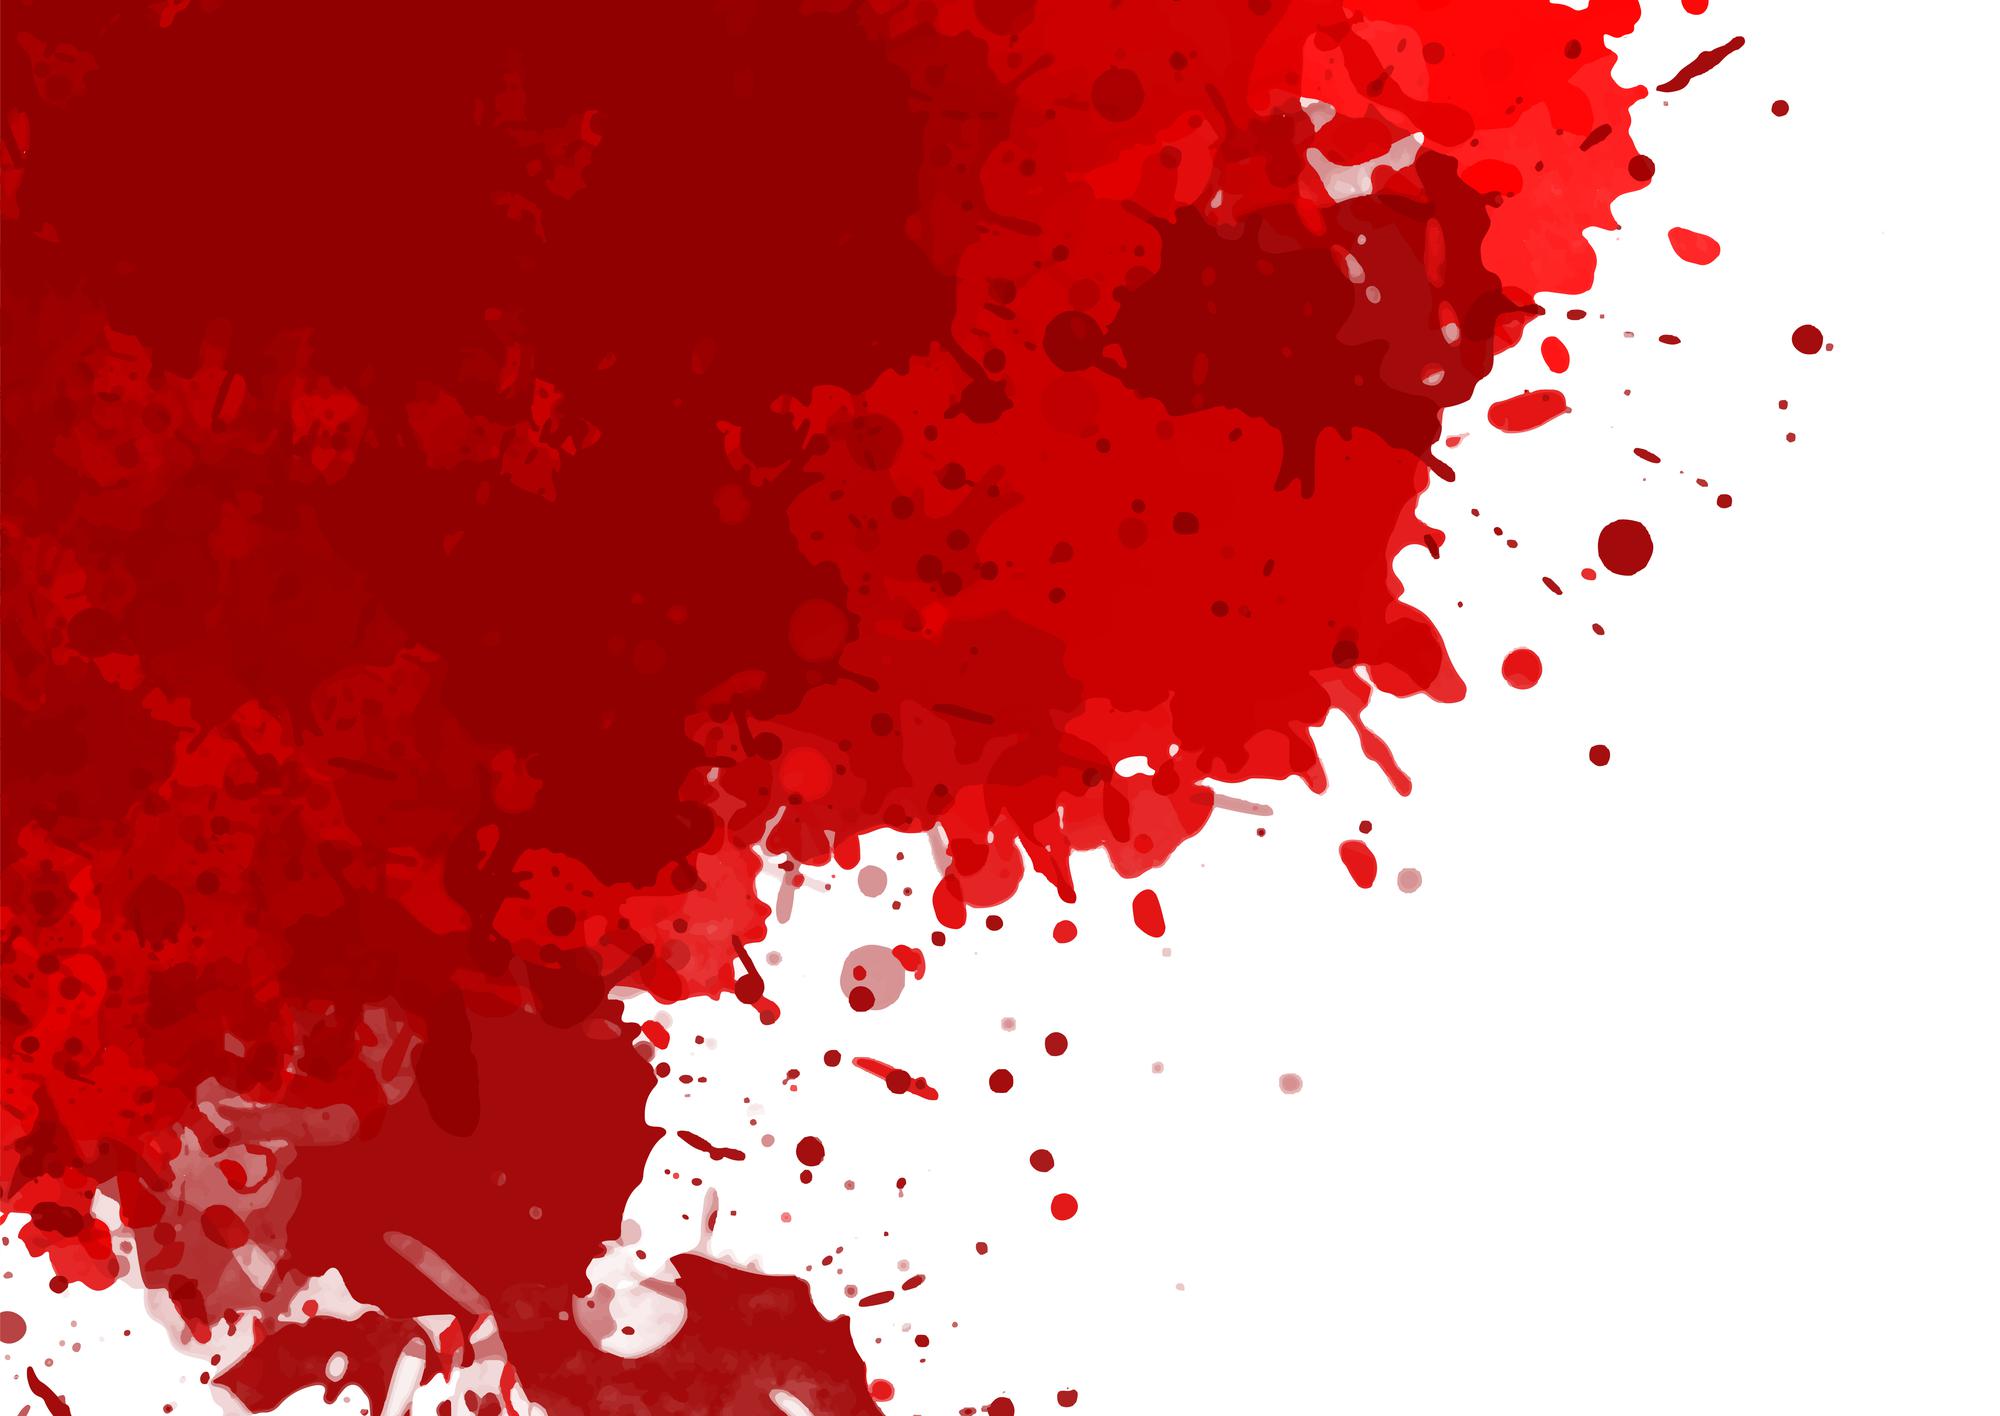 Halloween background with red blood splatter design